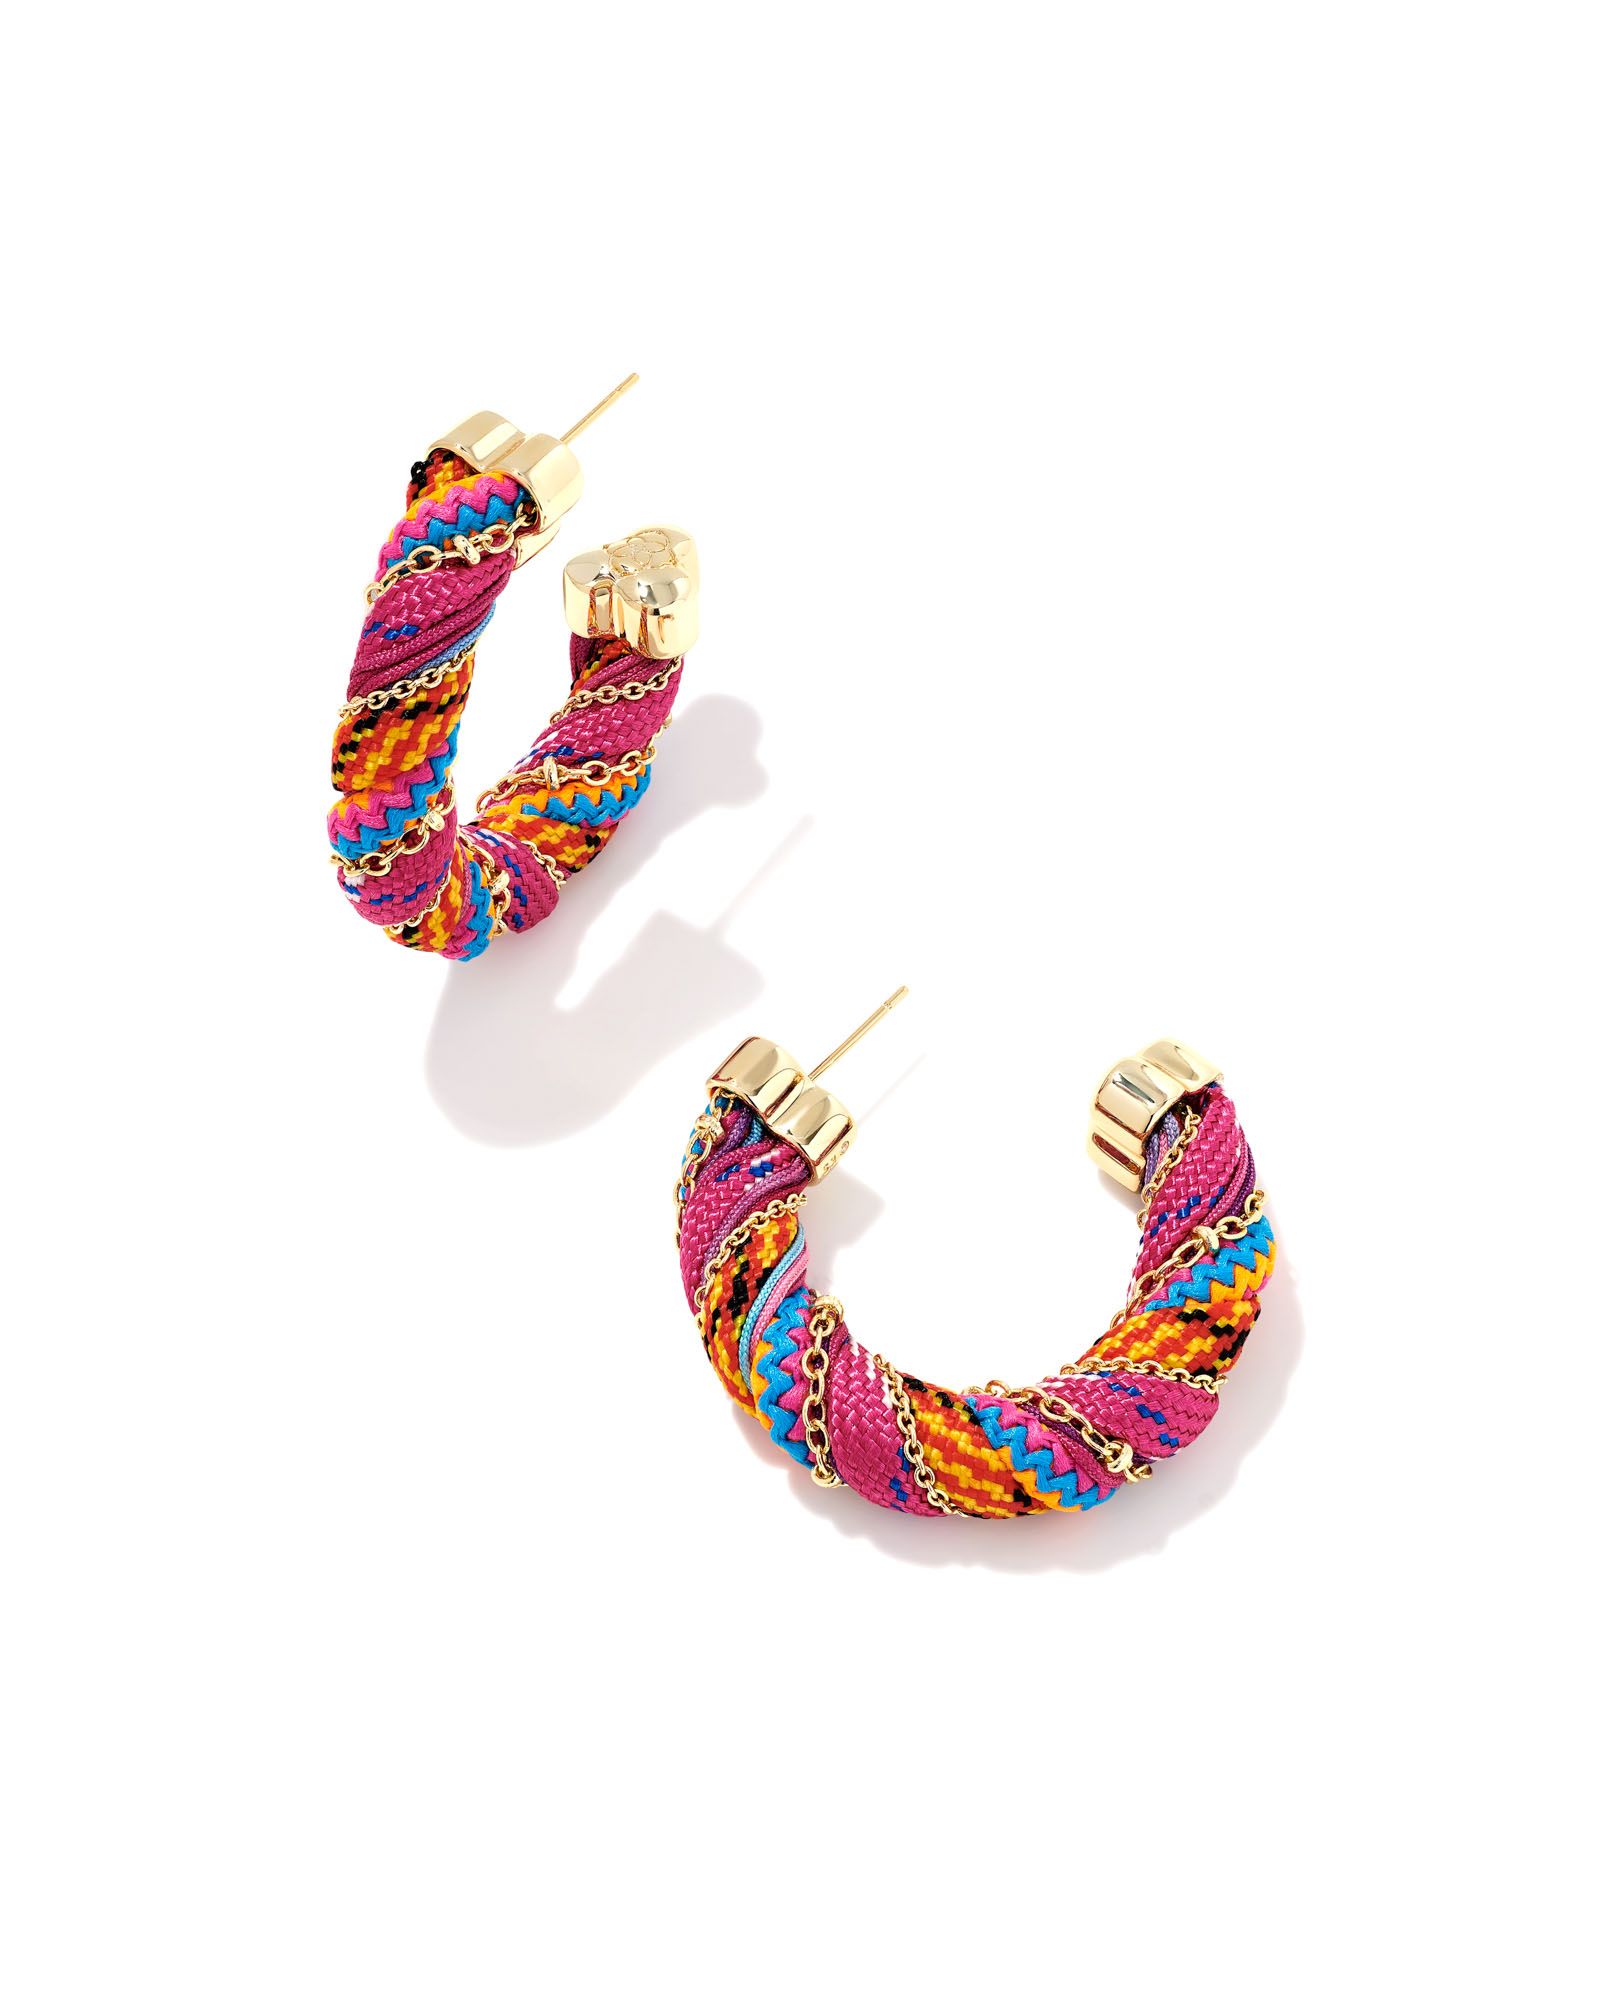 Masie Gold Corded Hoop Earrings in Pink Mix | Kendra Scott | Kendra Scott